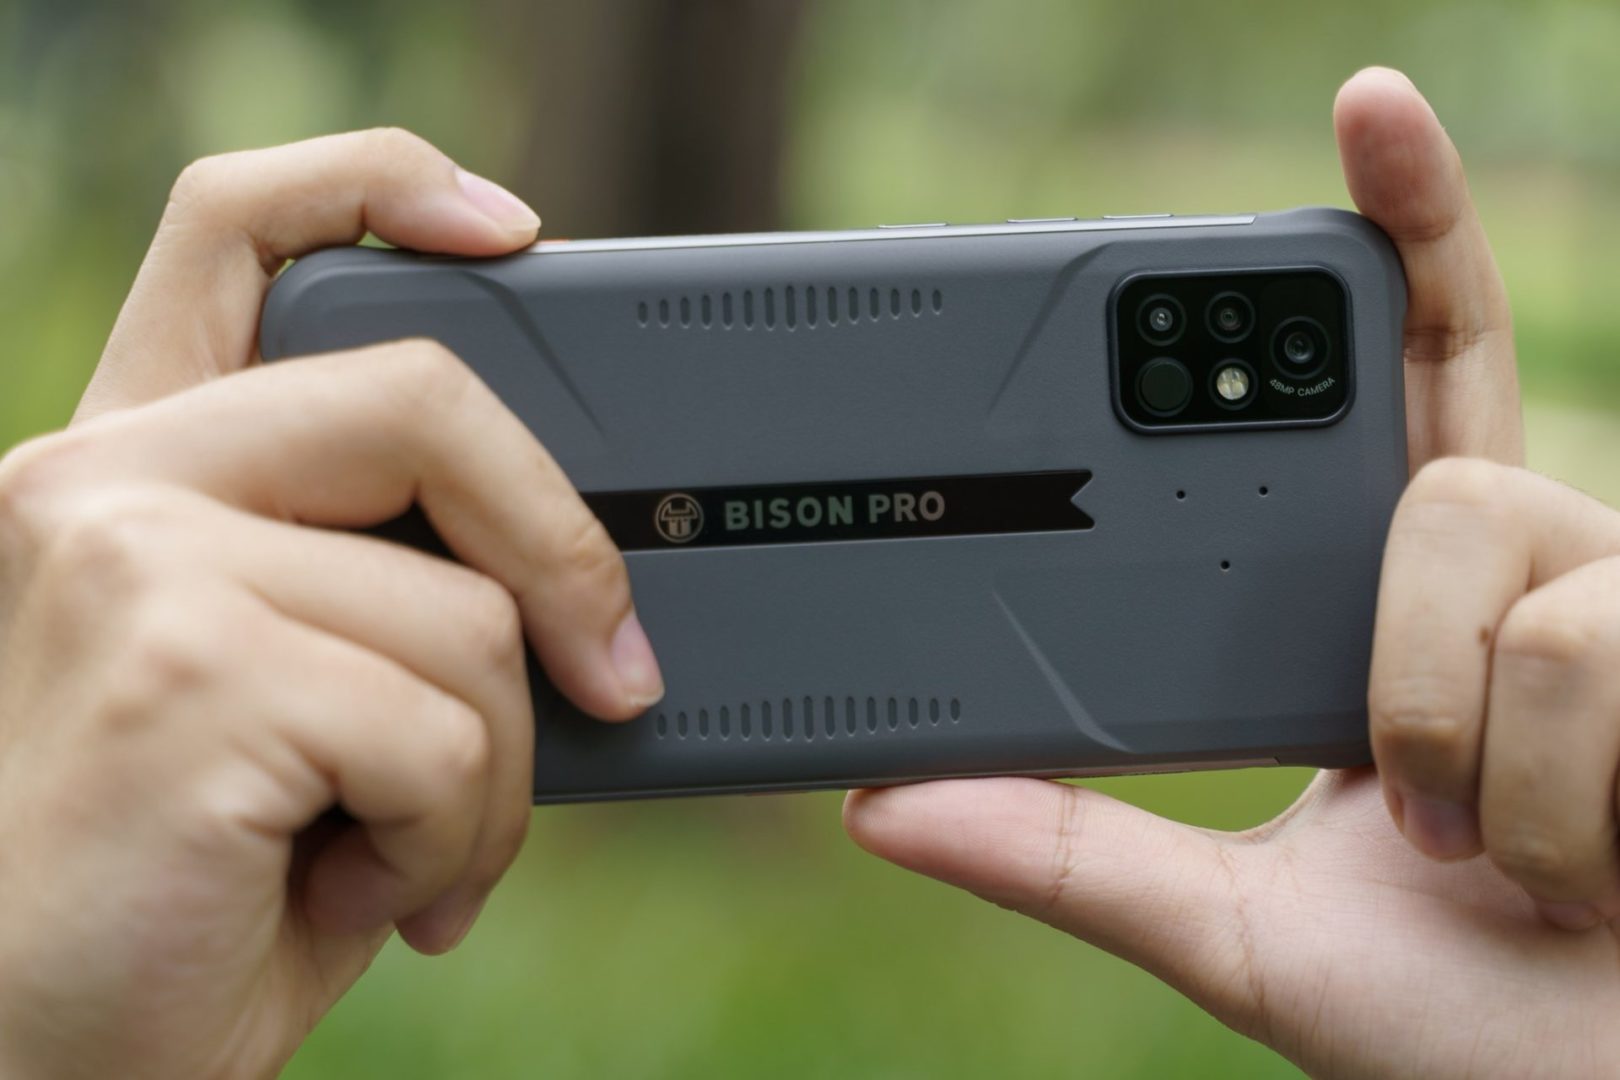 umidigi-bison-pro-smartphone-review